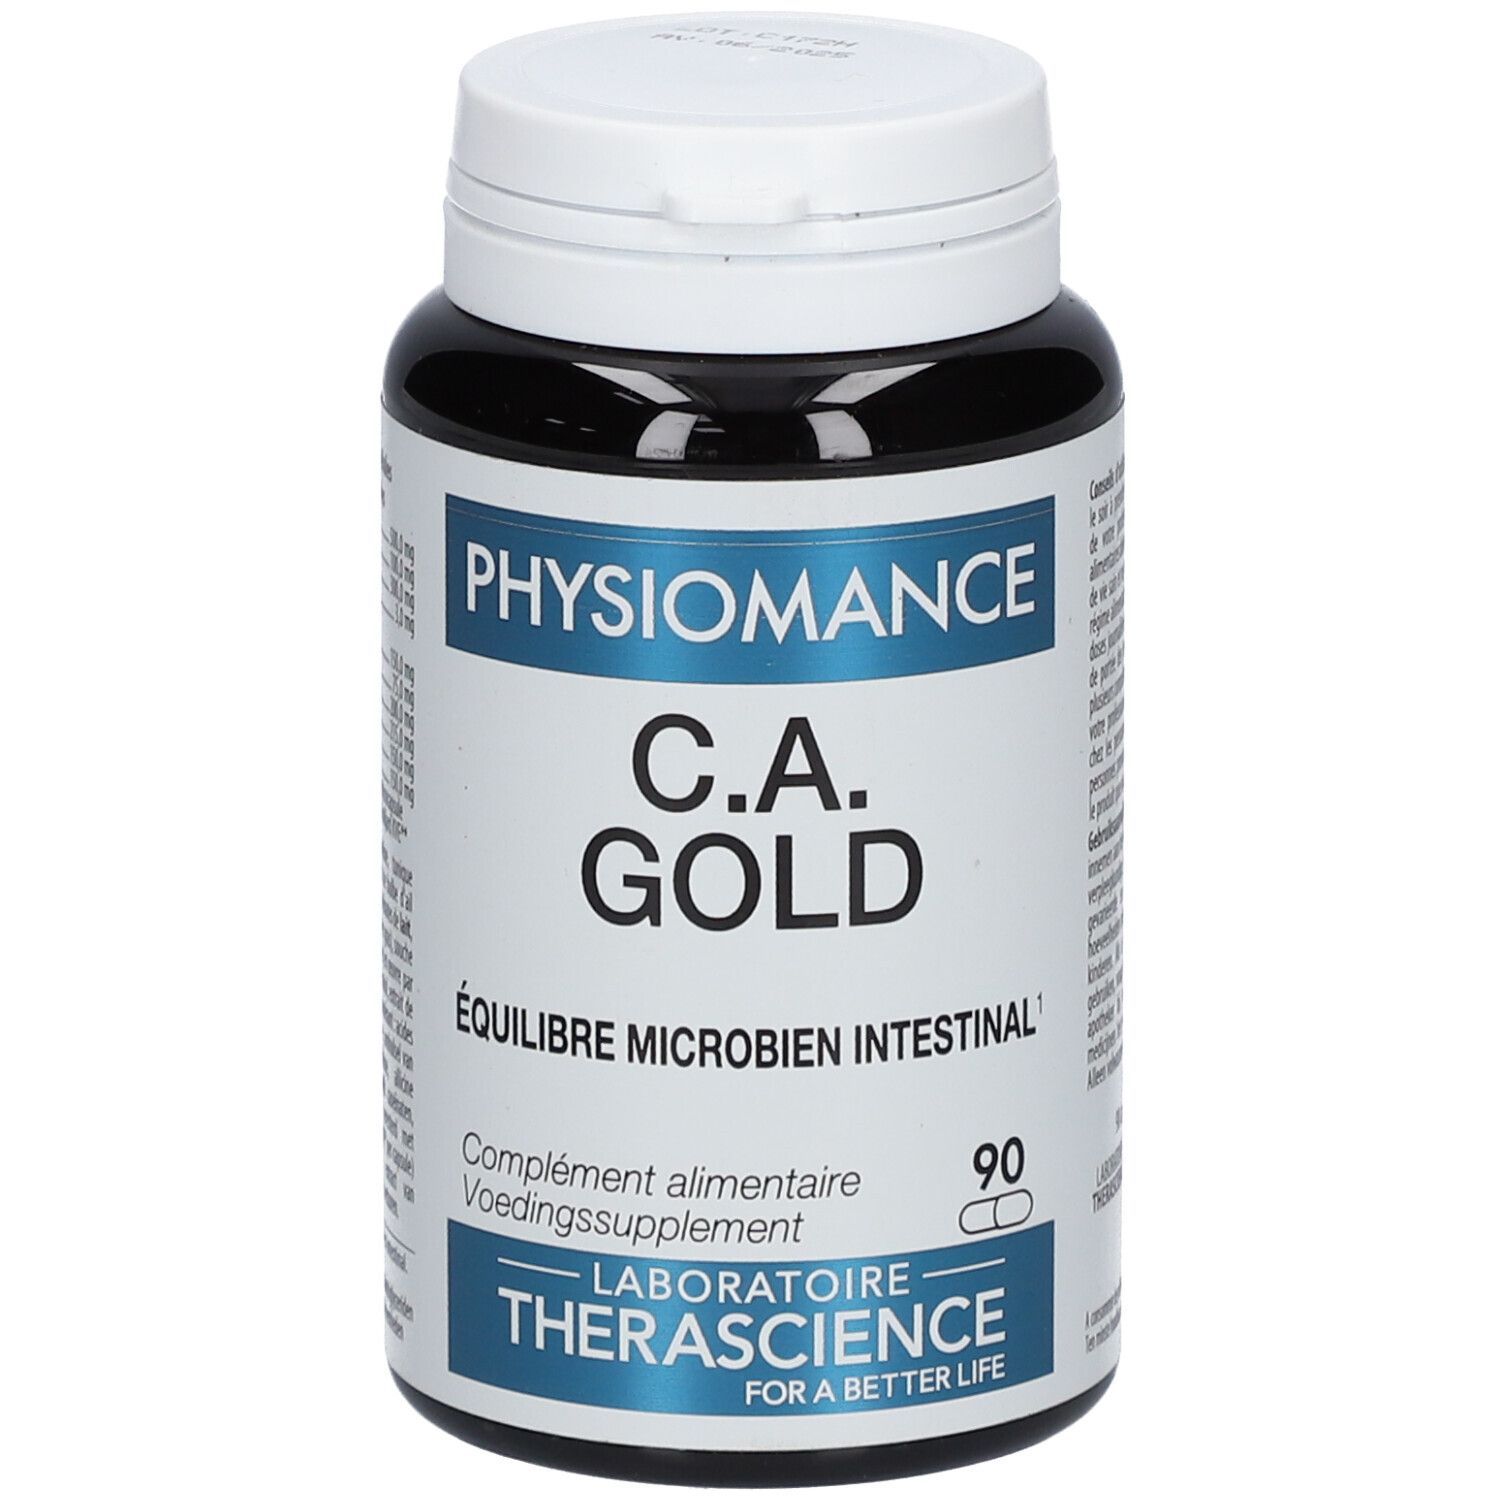 Physiomance C.a. Gold